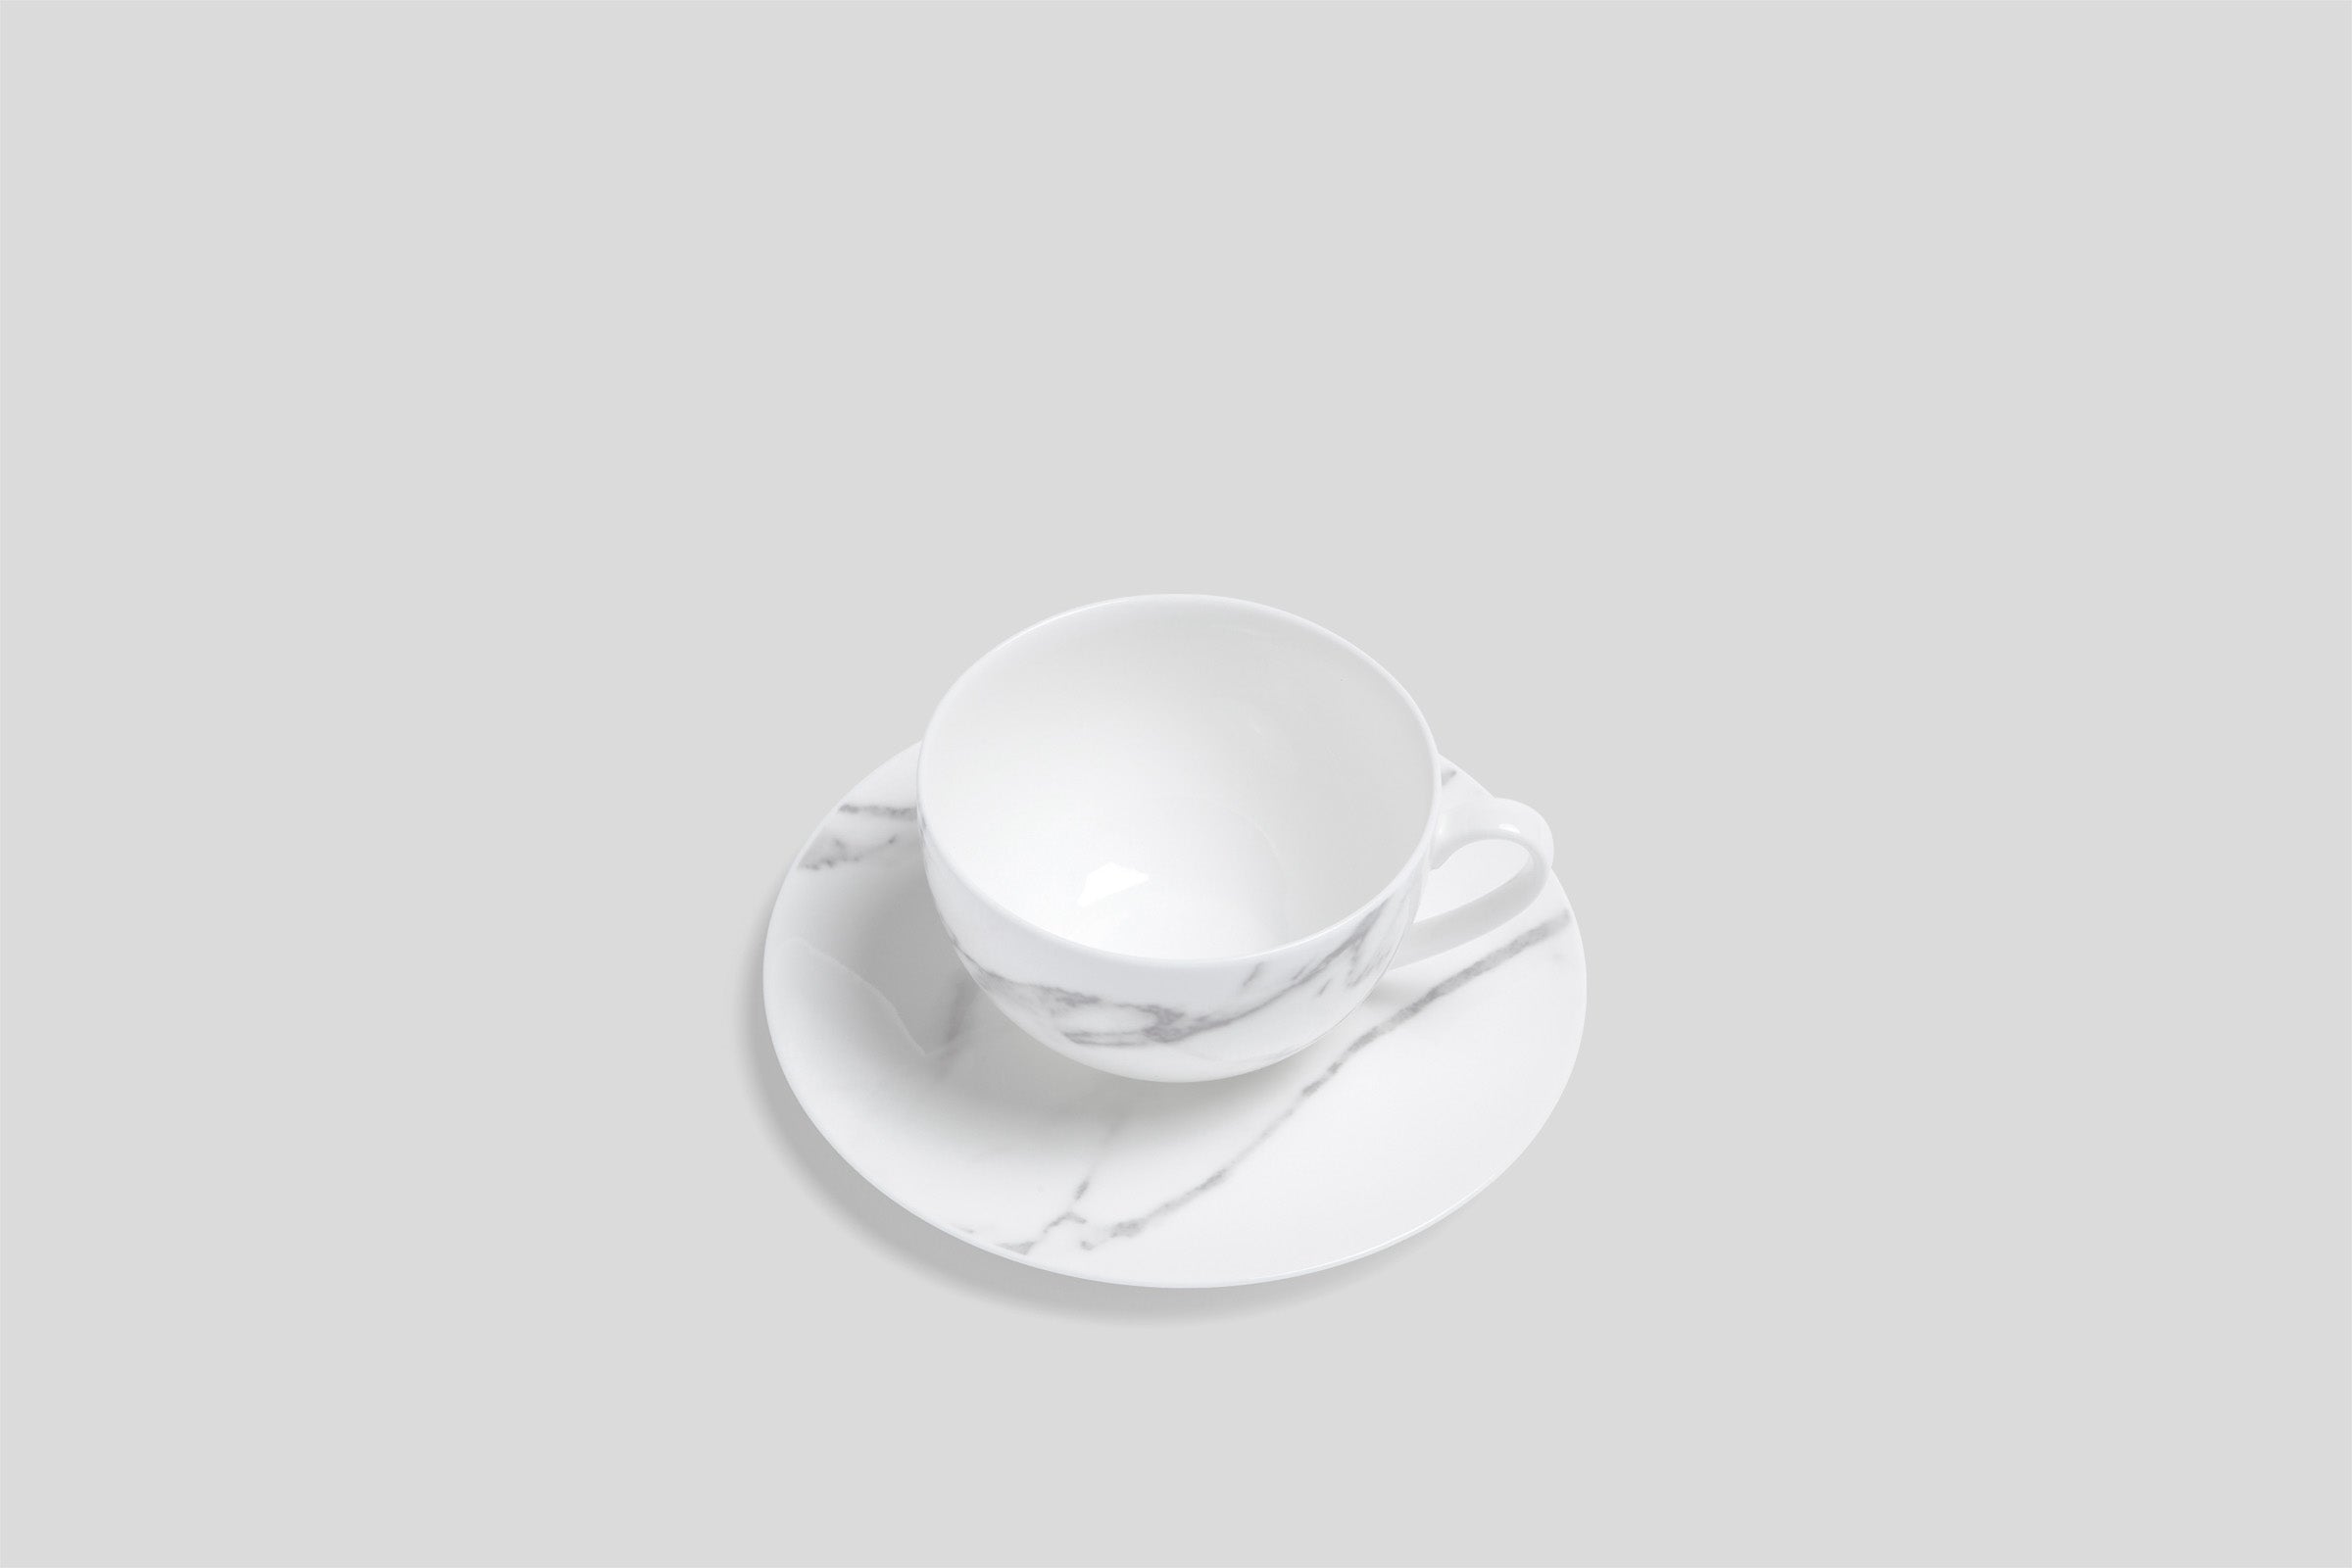 Designer-Luxury-Modern-Dibbern Carrara Teacup & Saucer-Dibbern-Carrara-Bodo Sperlein-Bone China-Designer-Luxury-Modern-Tasse-Becher-Kaffee Tasse